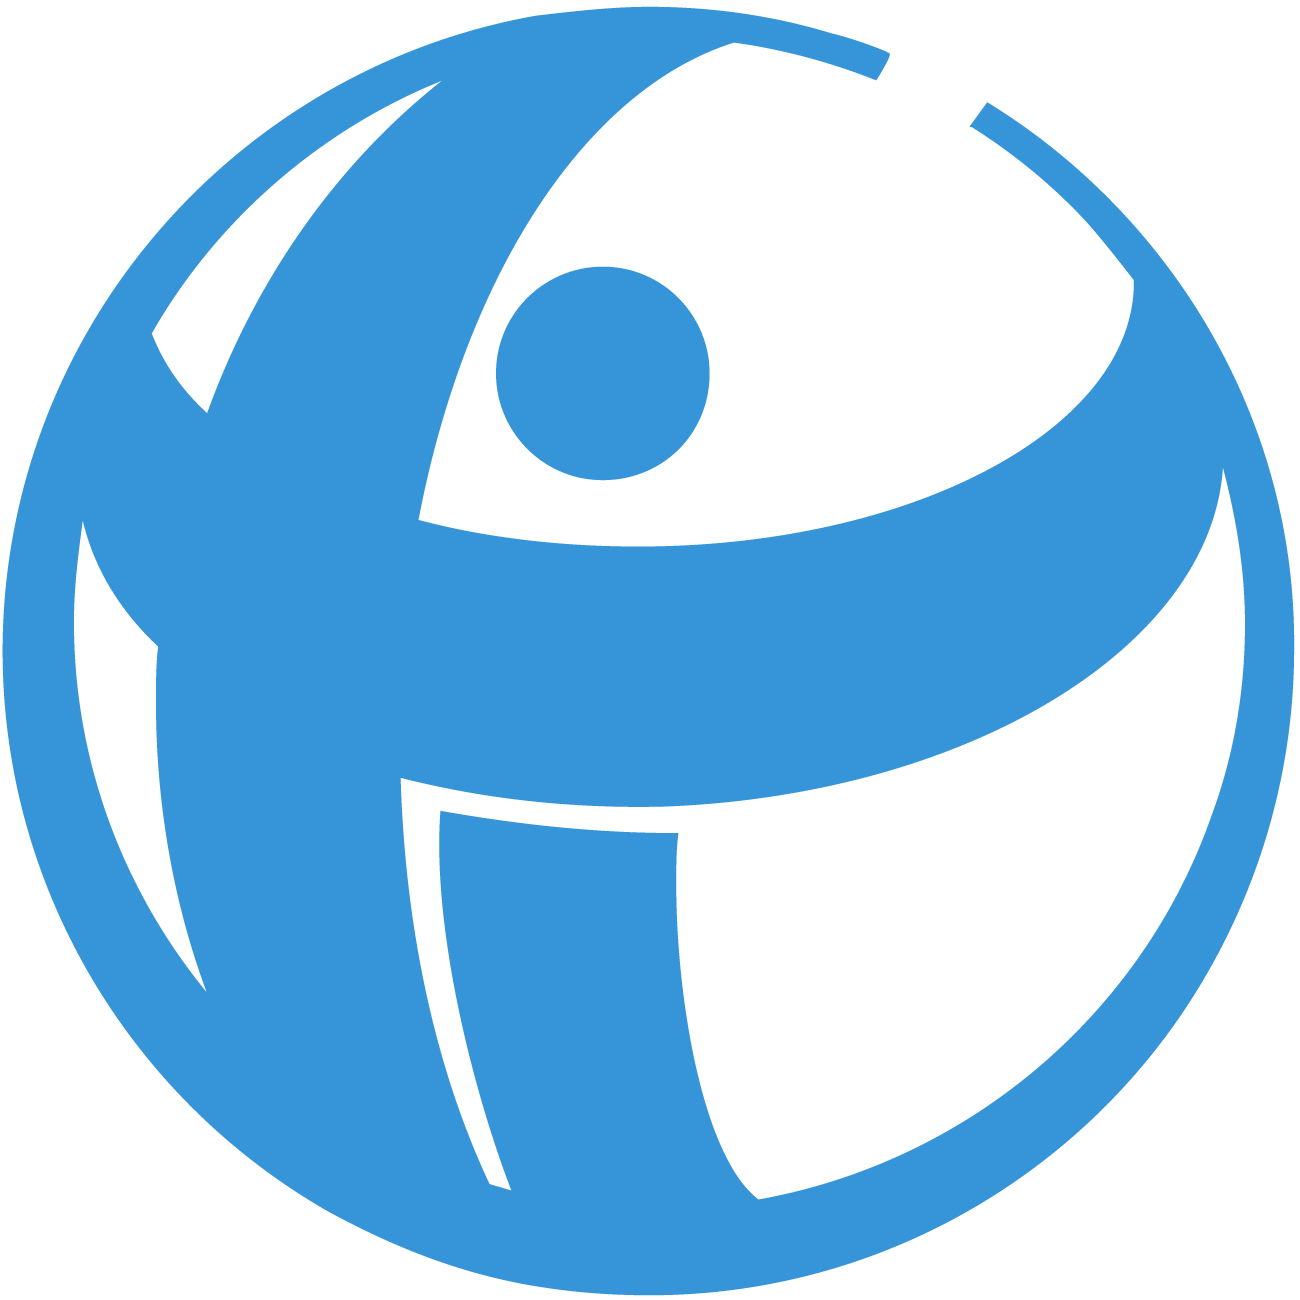 Transparency International logo.